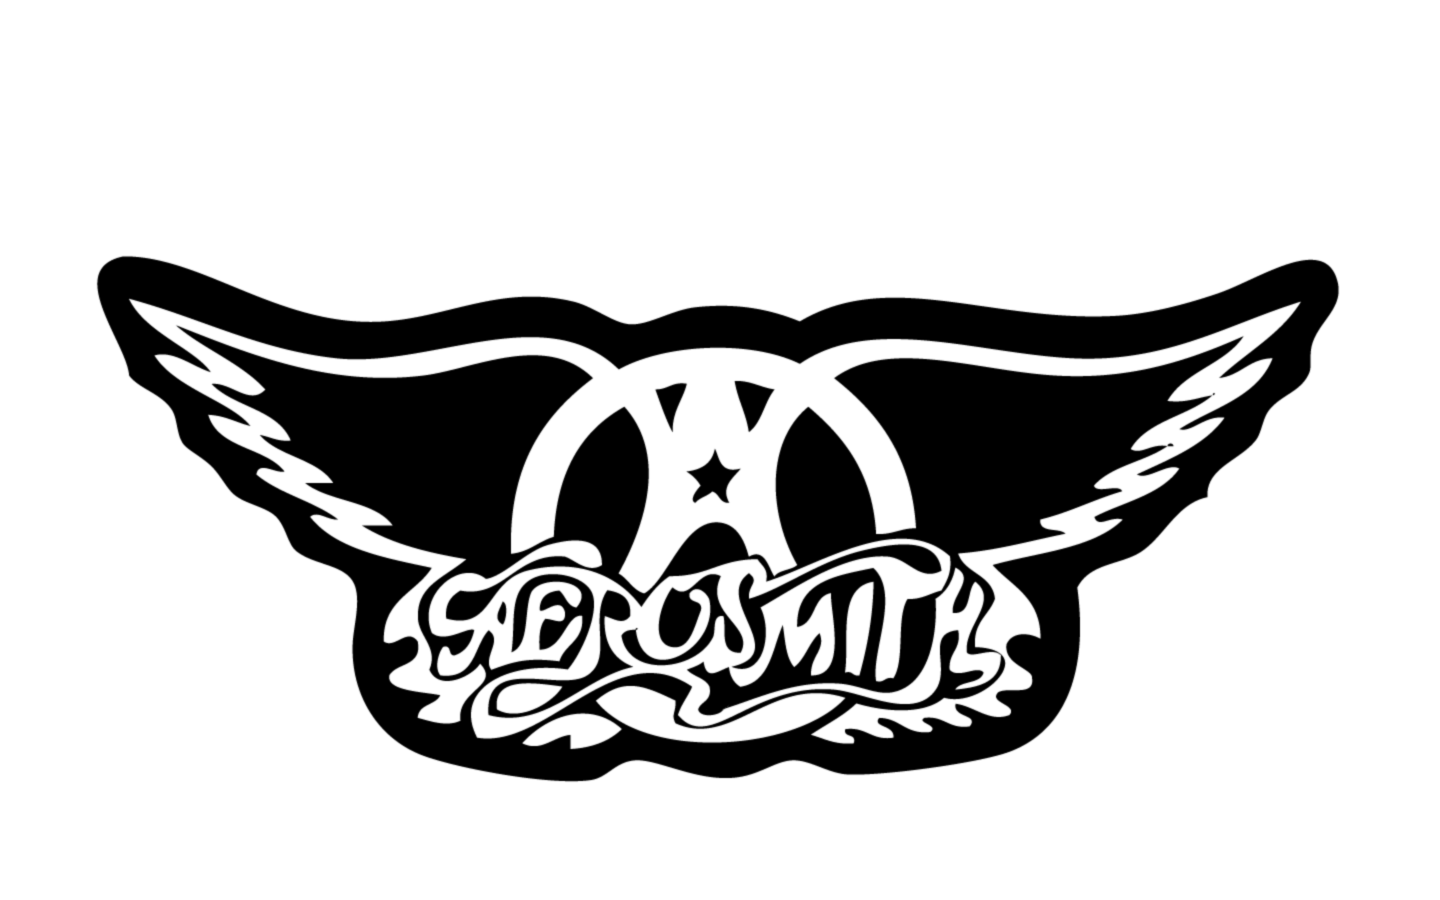 Aerosmith Picture FAG Wallpaper, Picture, Image